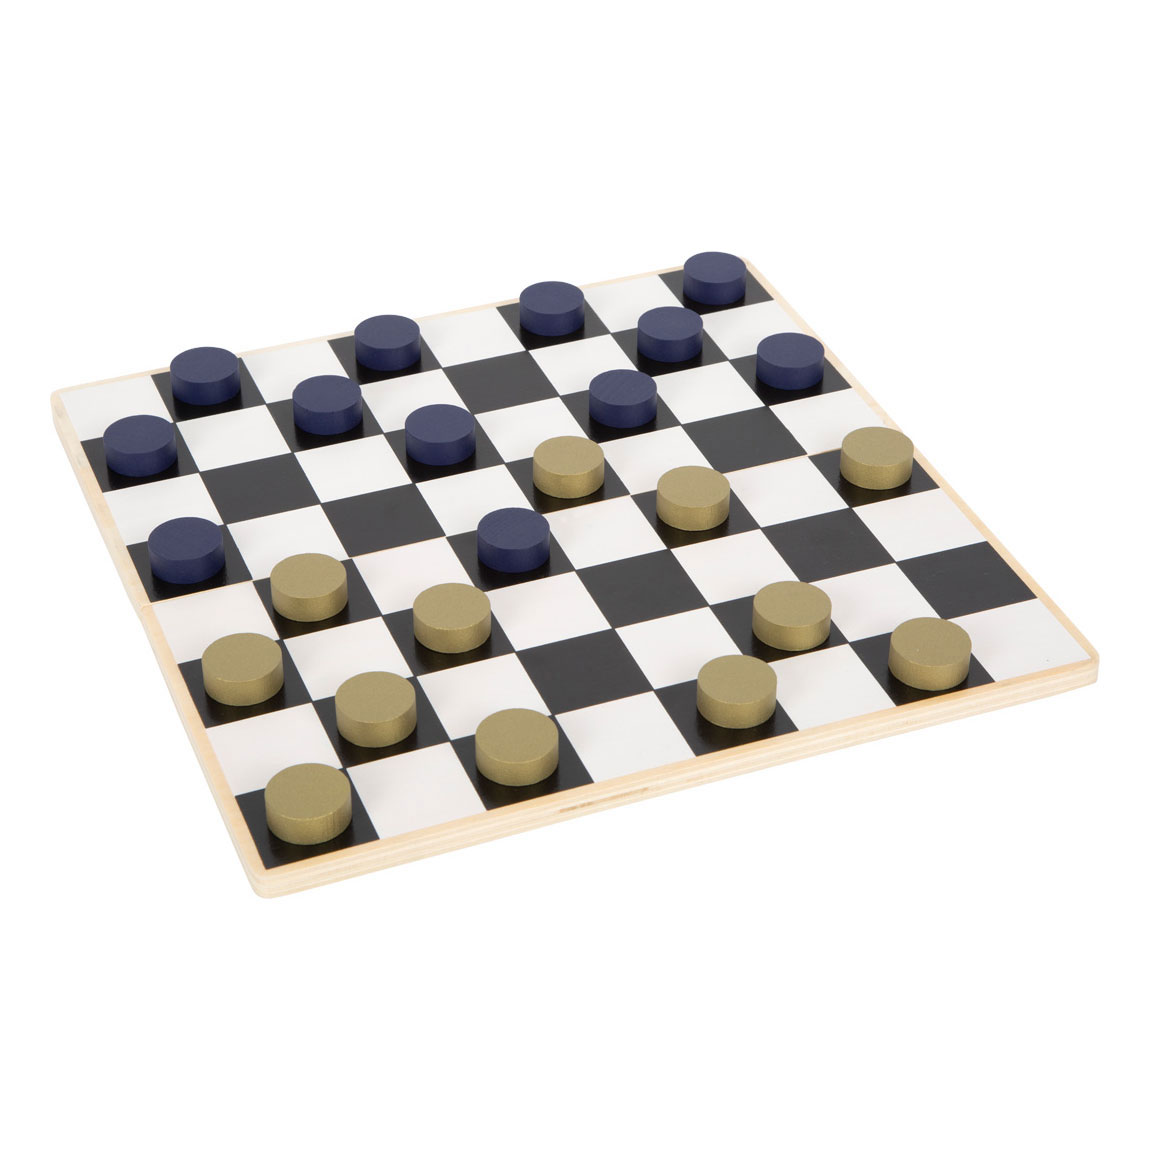 Small Foot - Jeu d'échecs et de backgammon (édition dorée)